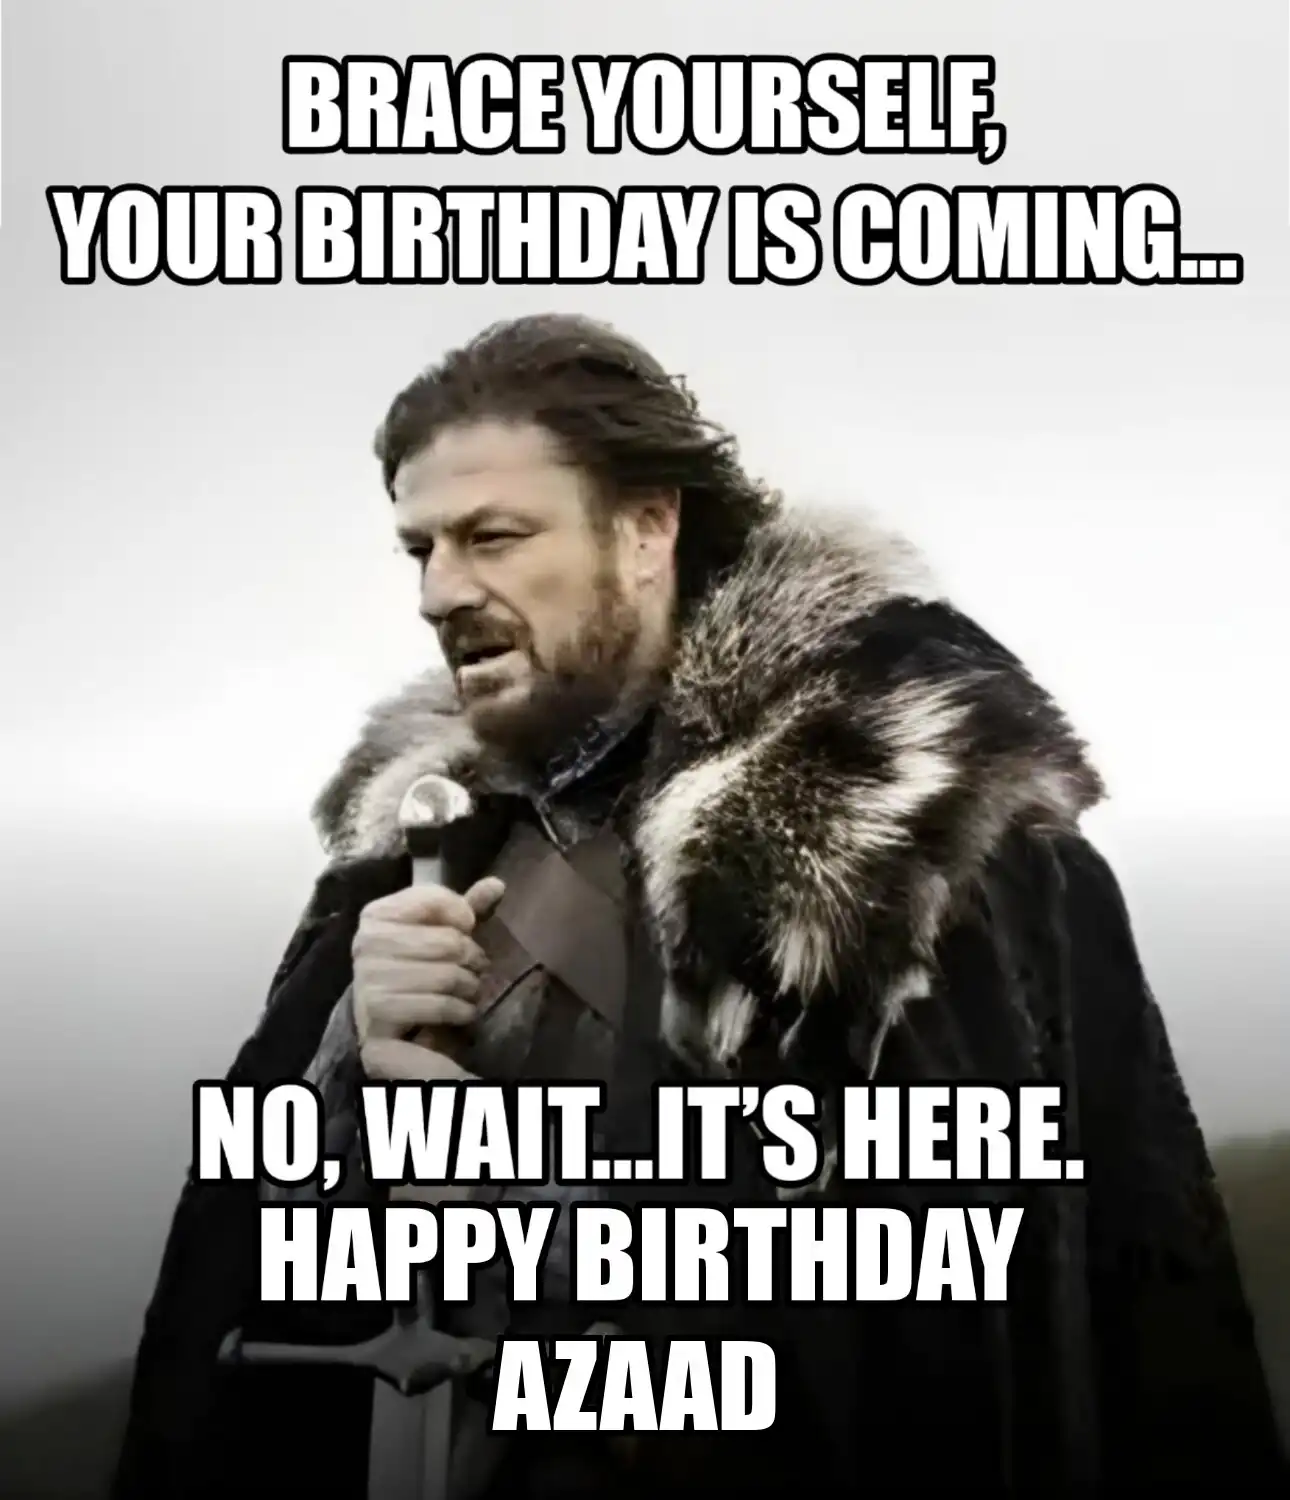 Happy Birthday Azaad Brace Yourself Your Birthday Is Coming Meme